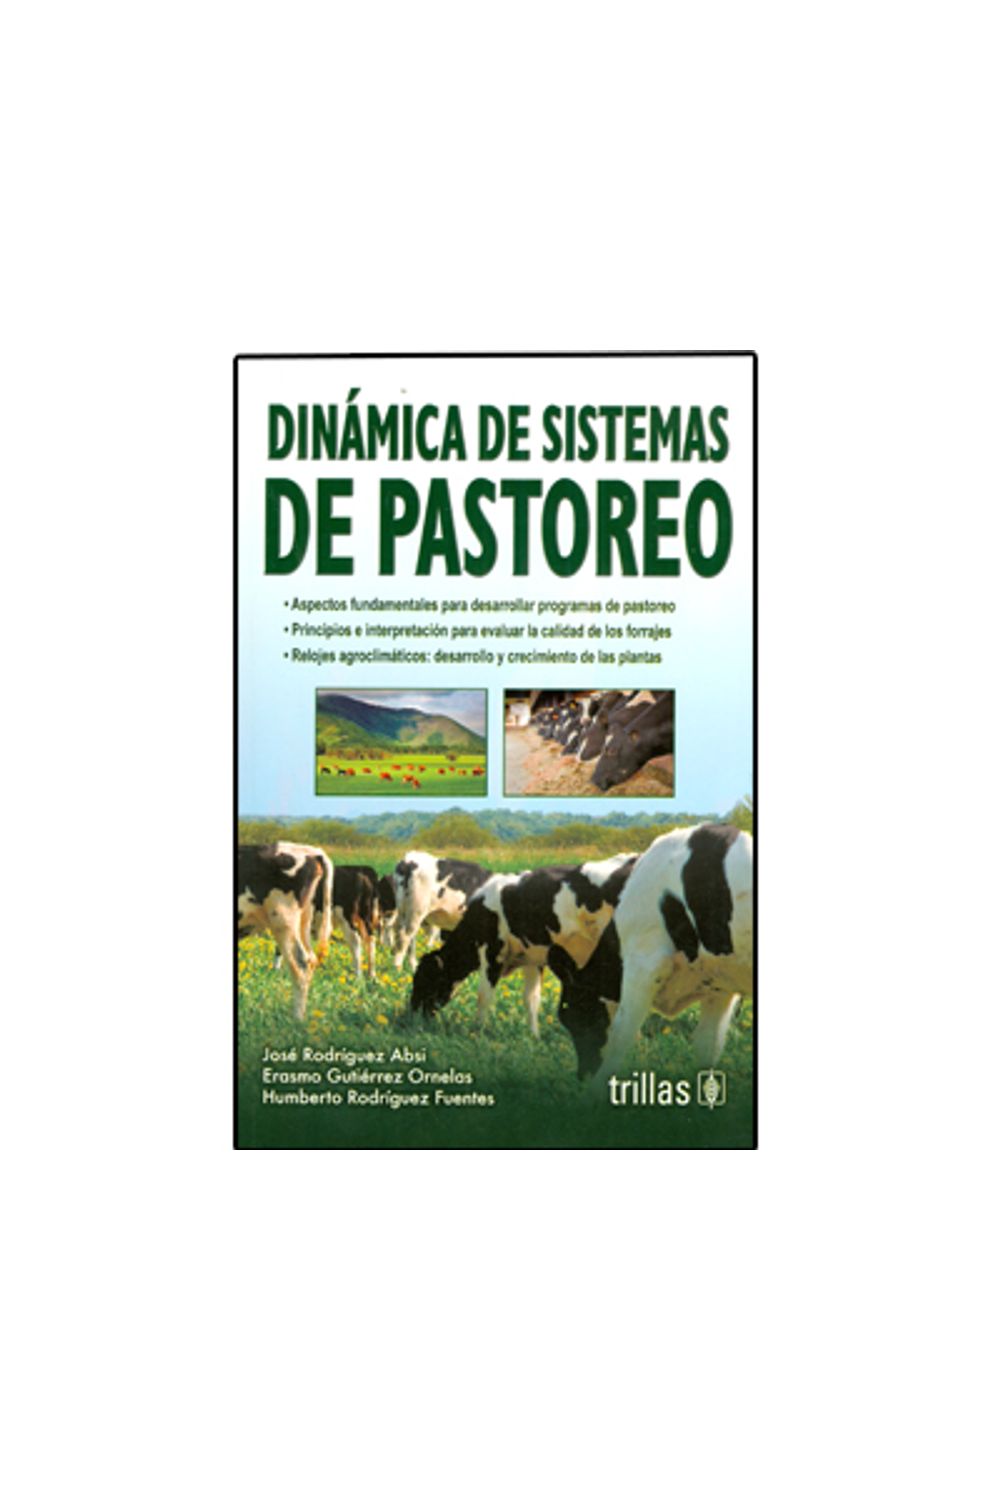 595_sistemas_de_pastoreo_tril